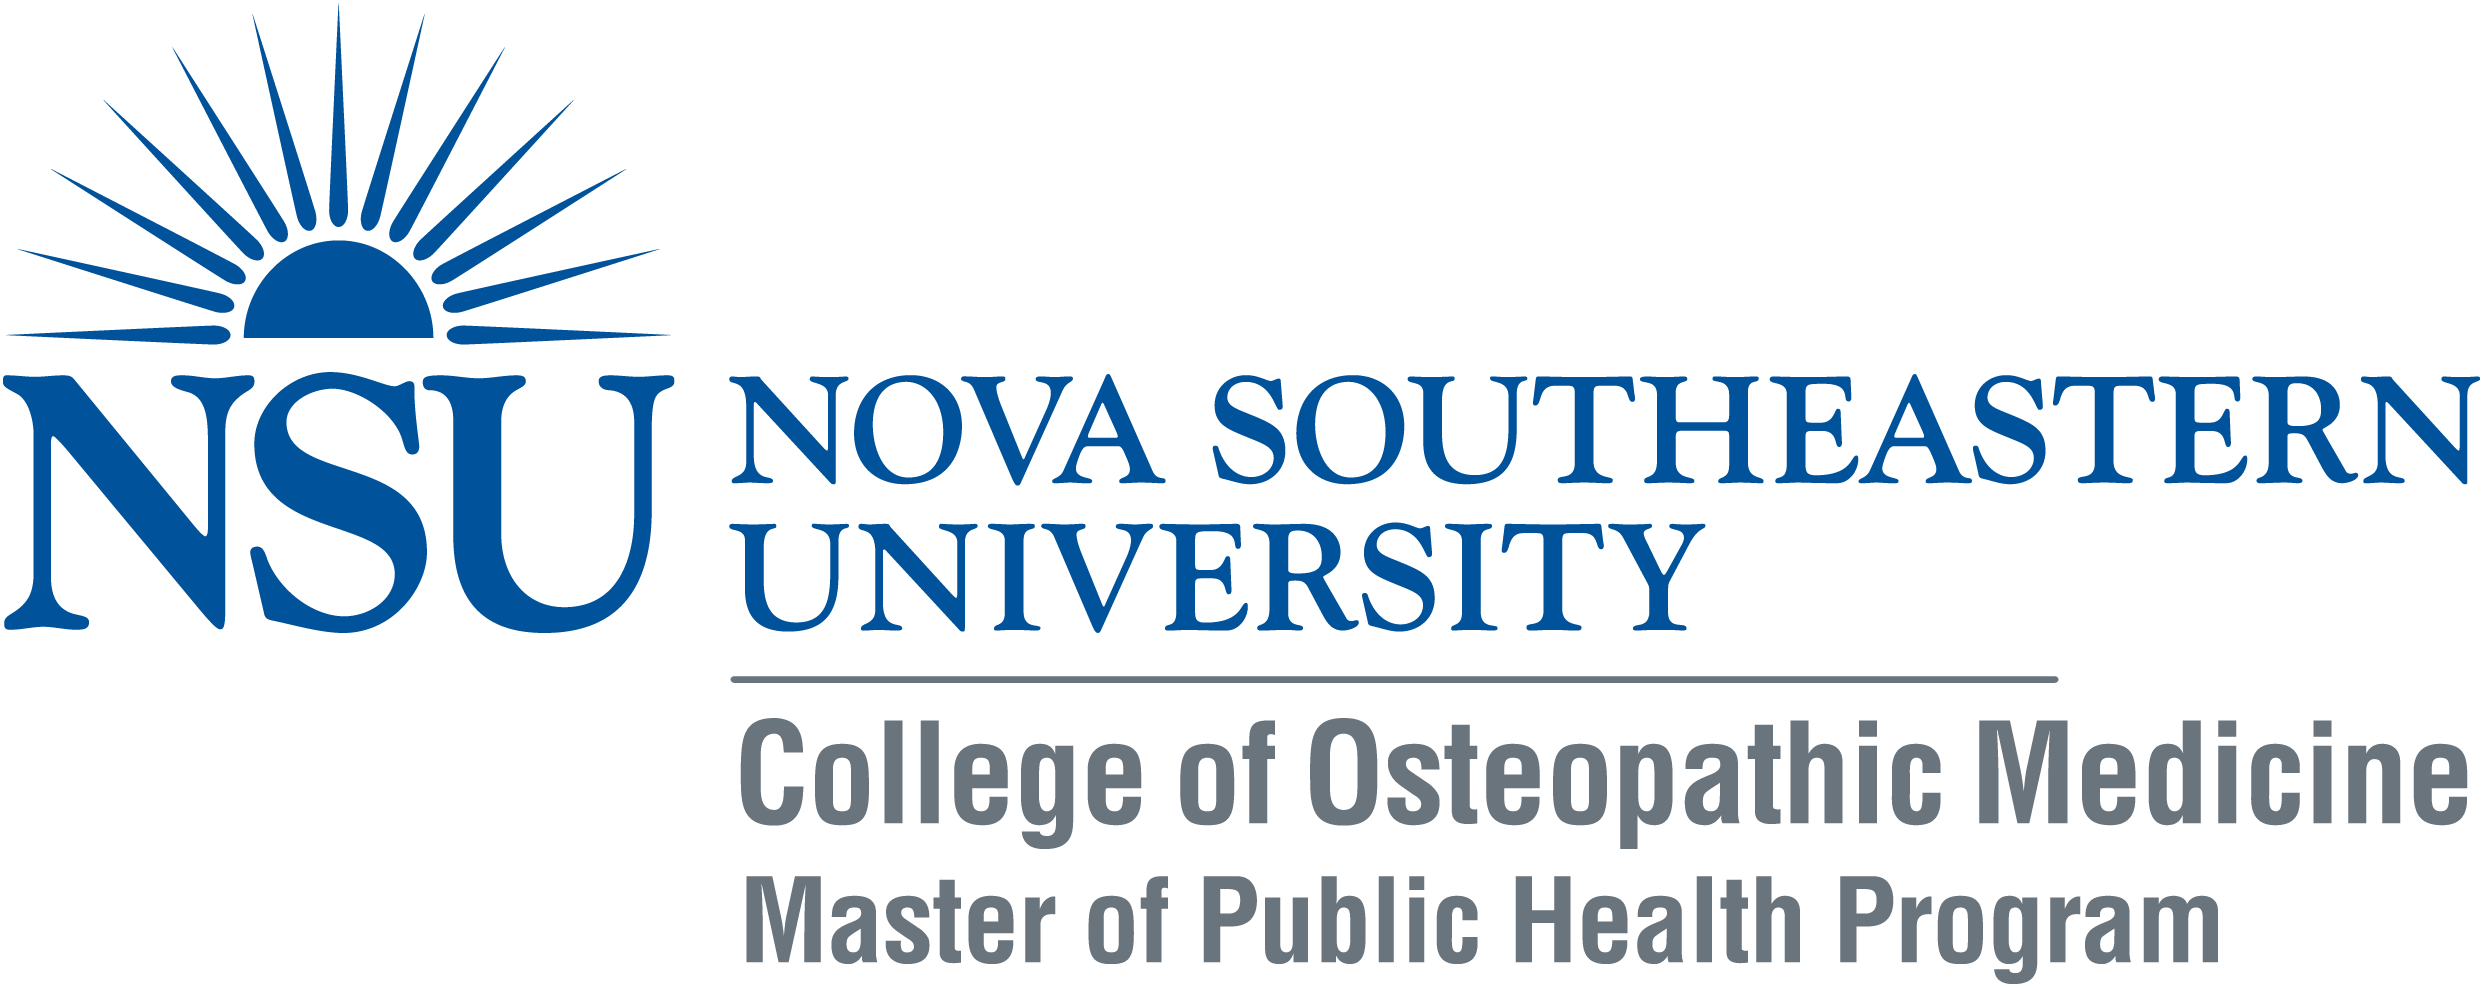 Nova Southeastern University Logo - Nova Southeastern University - Council on Education for Public Health